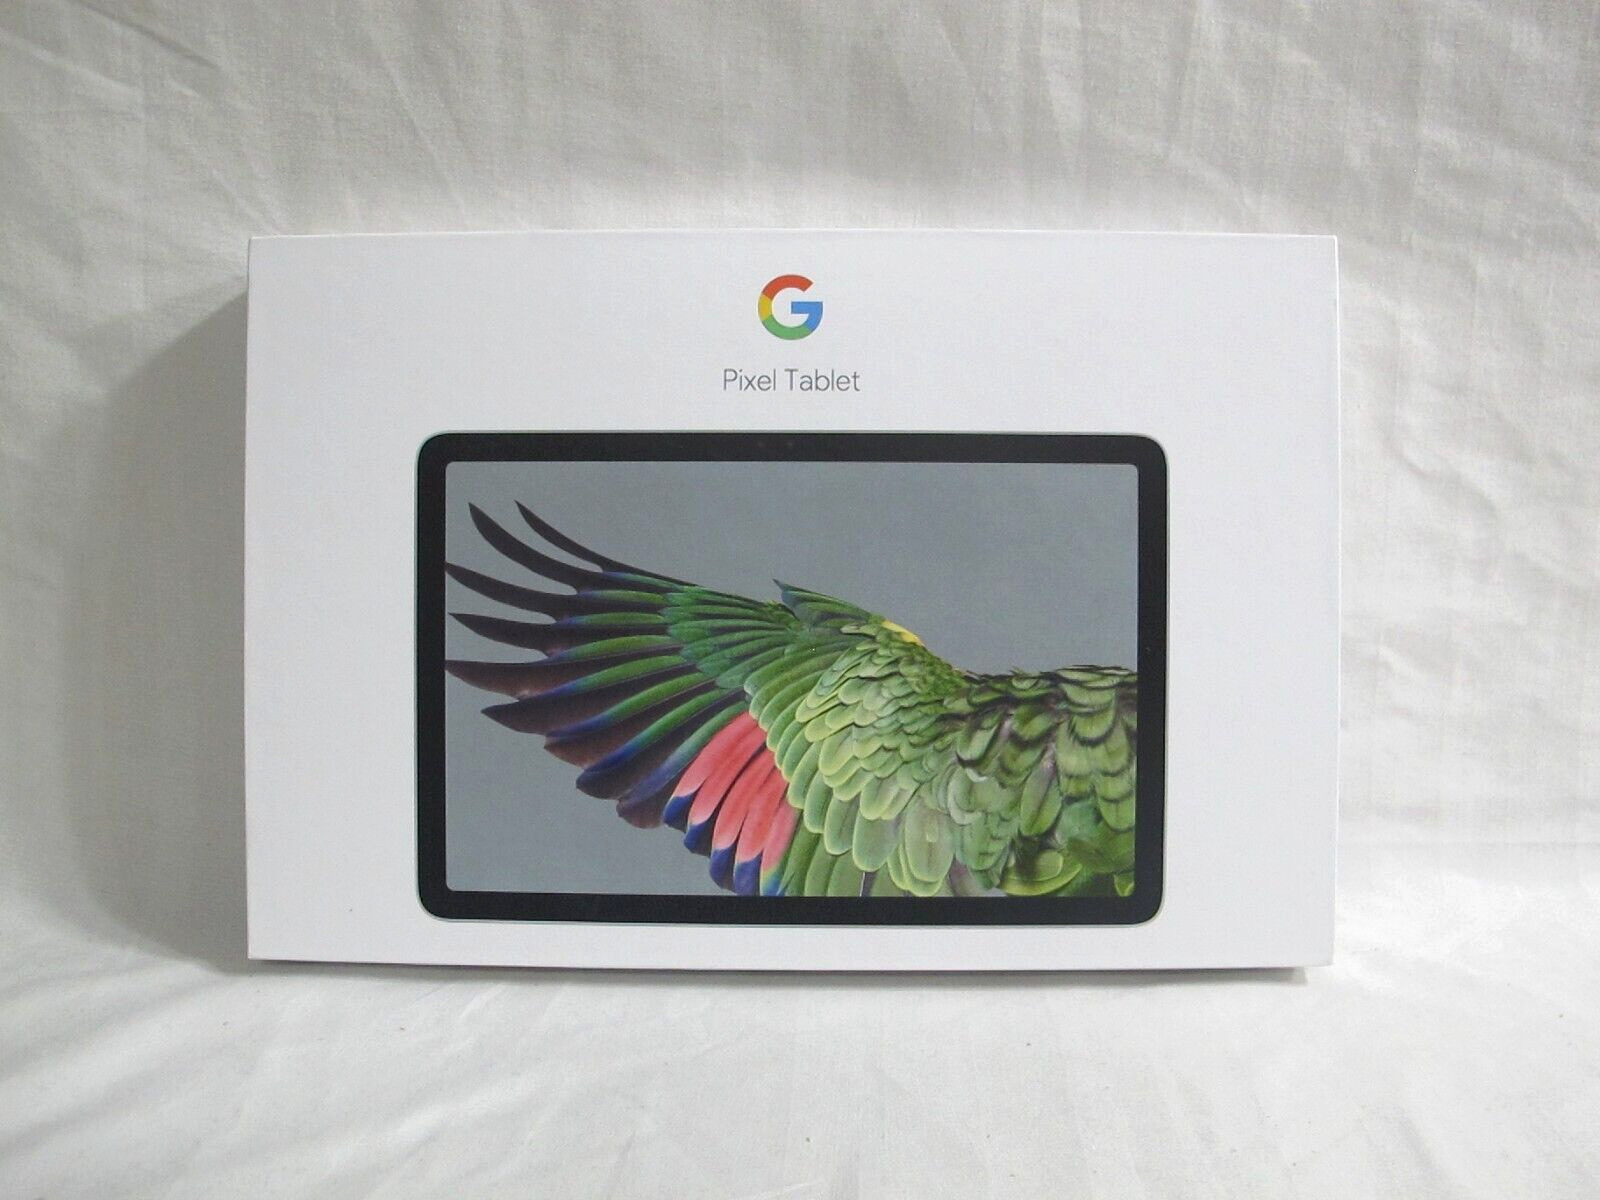 Google Pixel Tablet 128GB Hazel - Brand New In Box - Fast Shipping